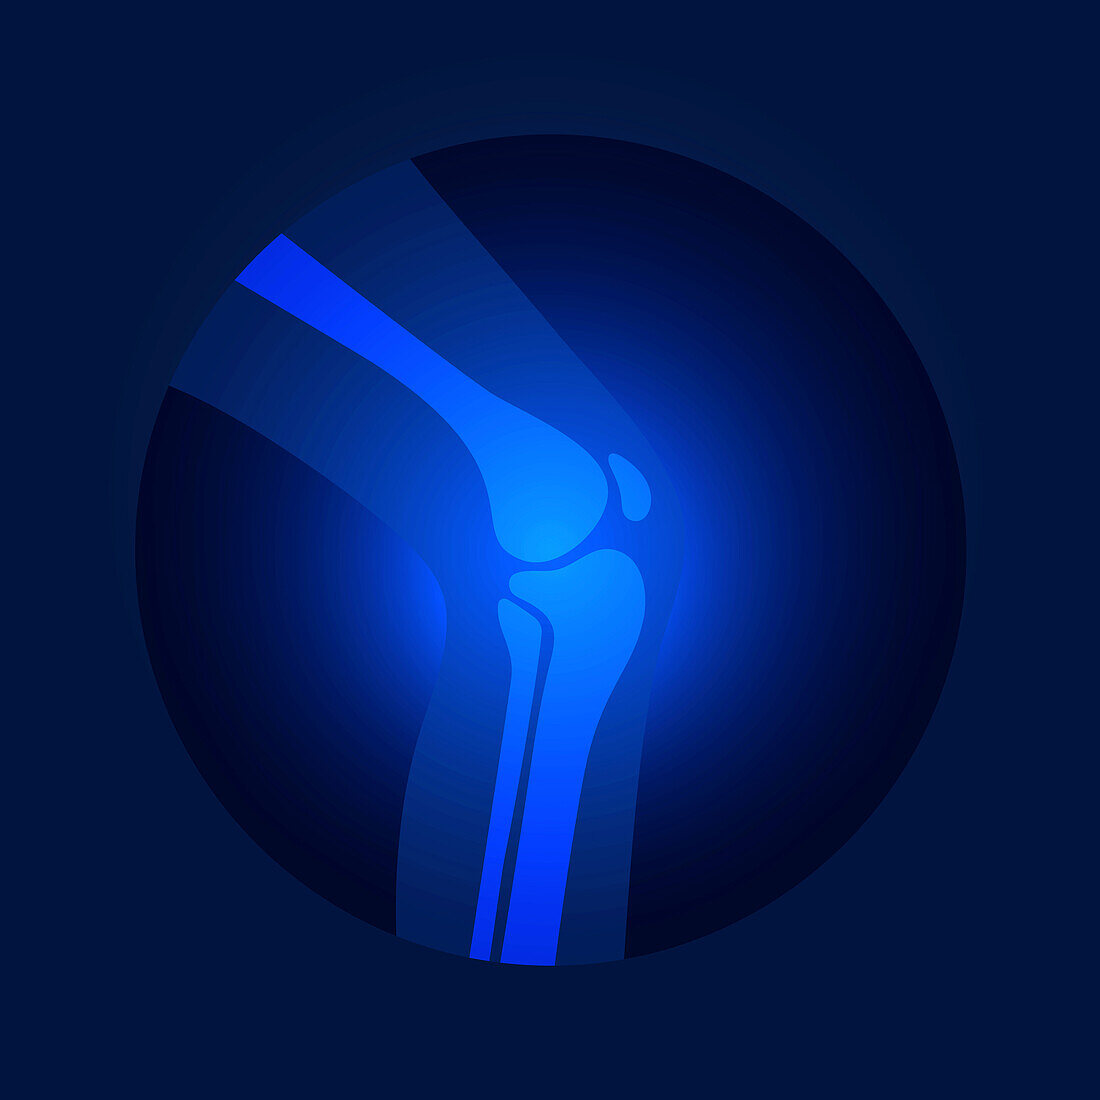 Knee pain, conceptual illustration